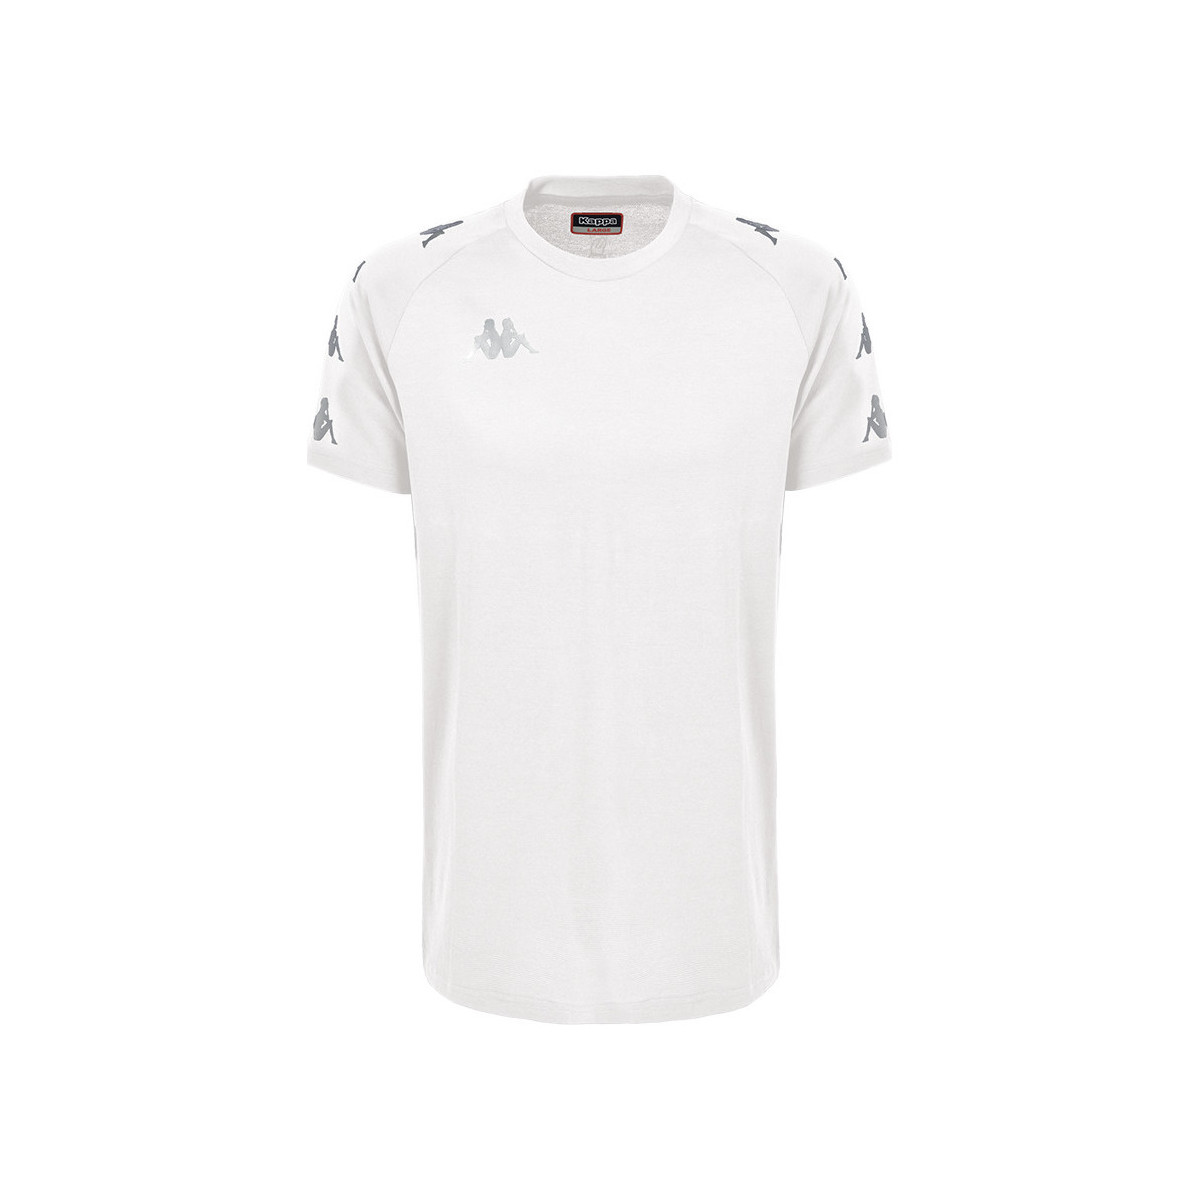 Kappa Blanc T-shirt Ancone zq5DKzvS